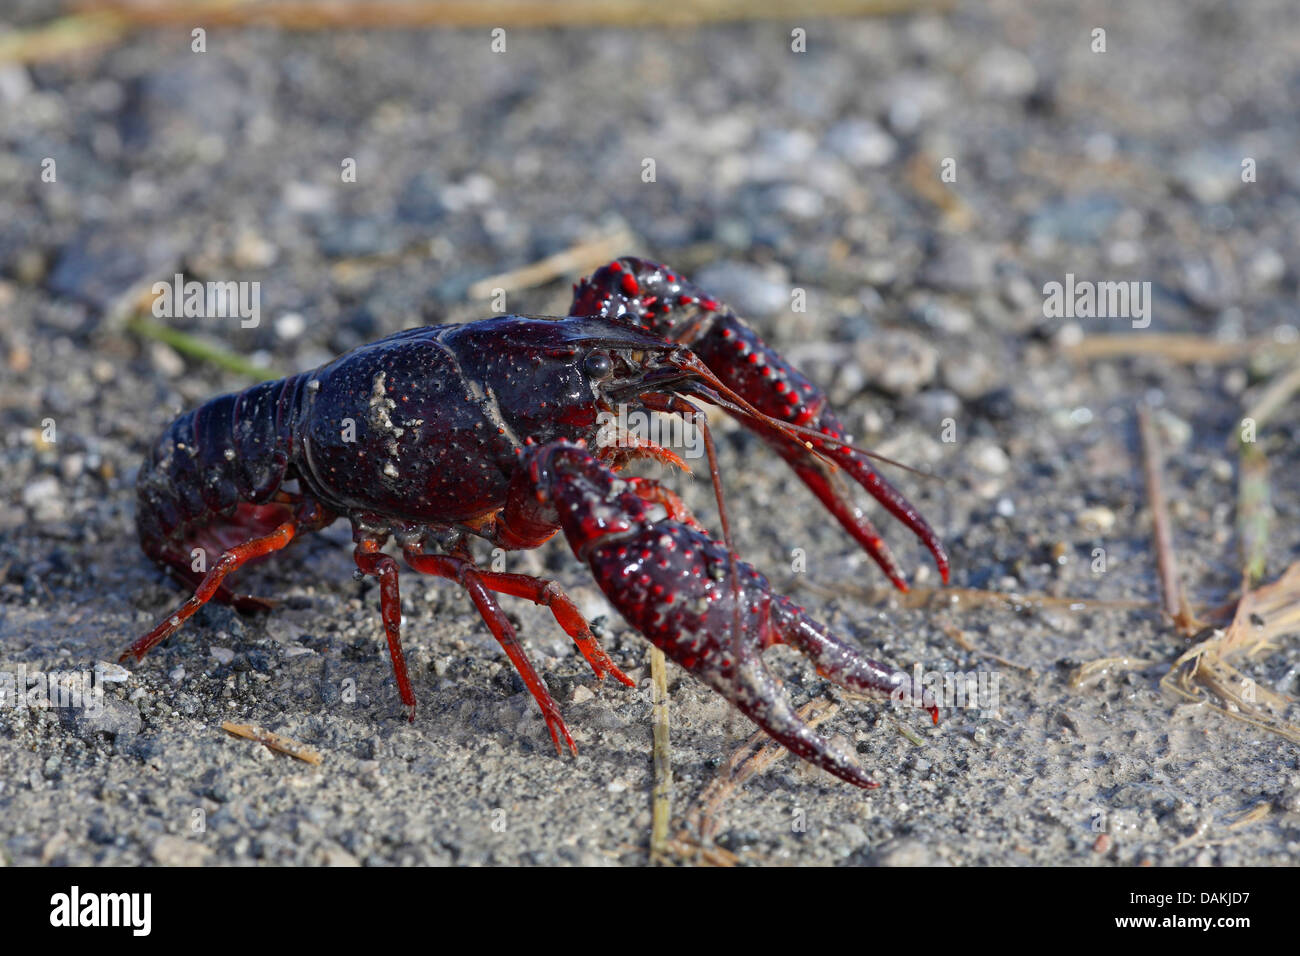 Louisiana red crayfish, red swamp crayfish, Louisiana swamp crayfish, red crayfish (Procambarus clarkii), side view, Spain, Andalusia, Guadalquivir Stock Photo